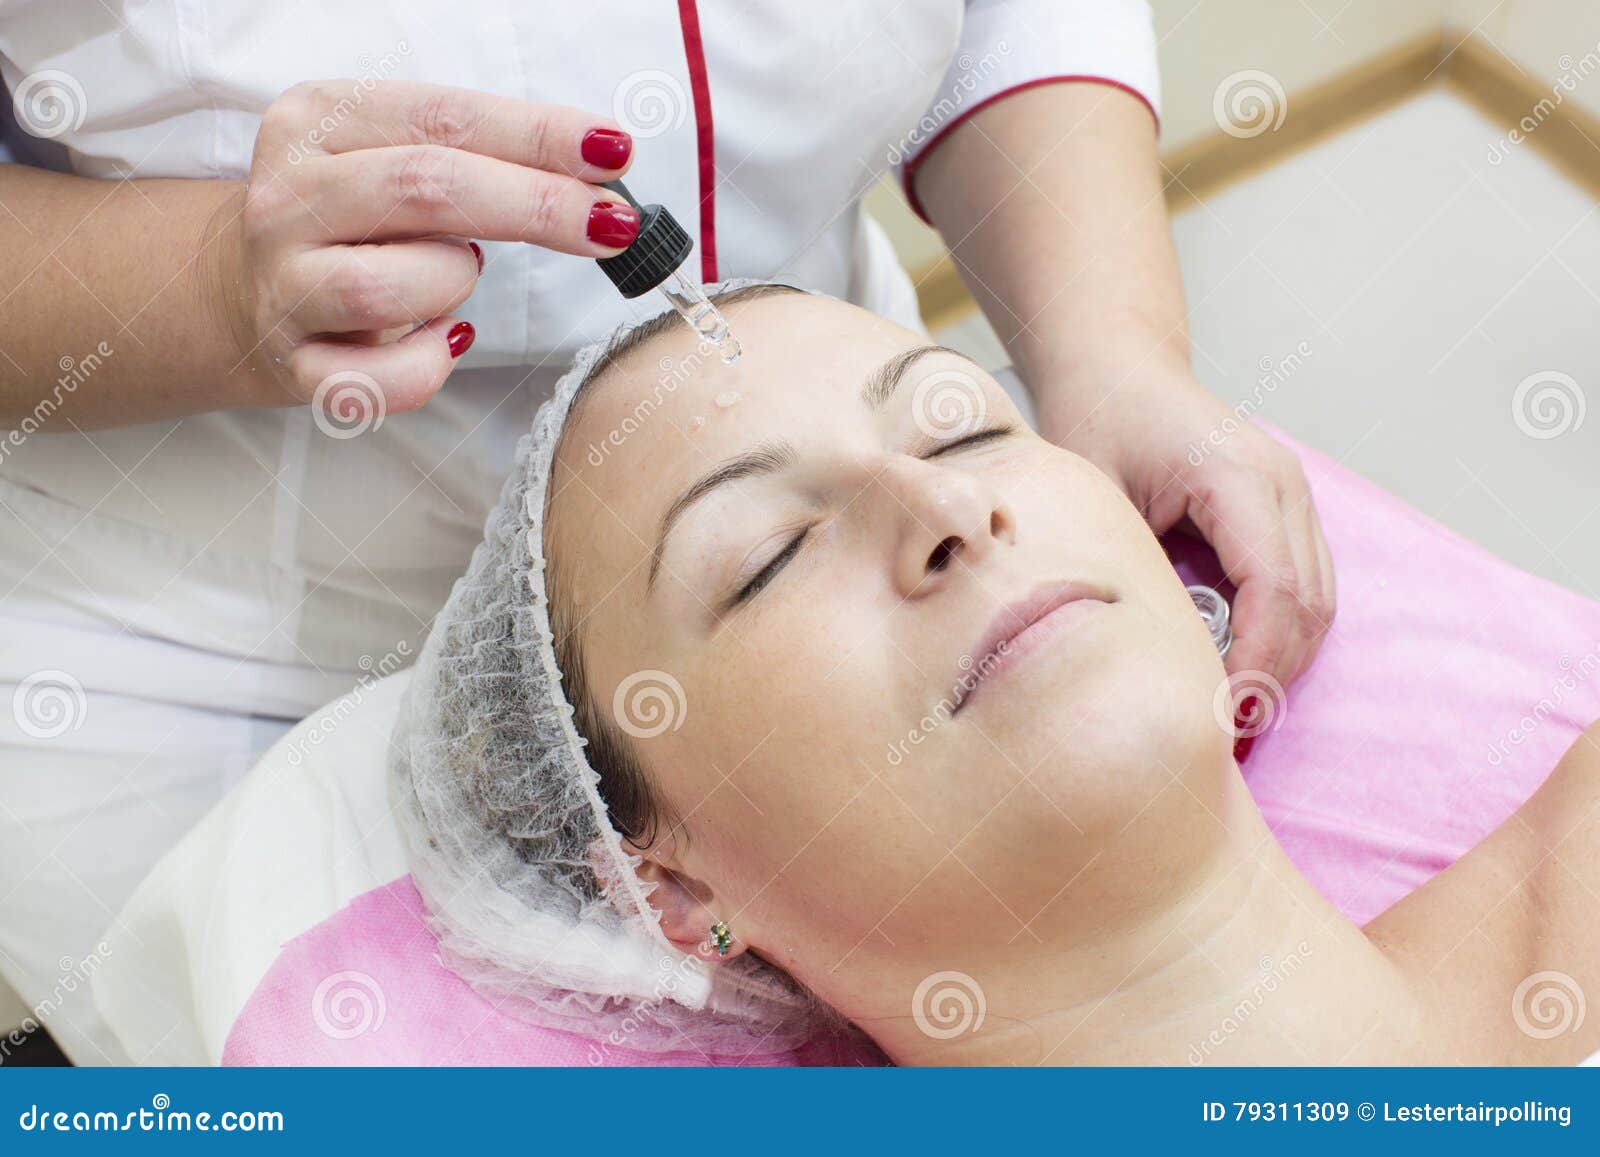 Process Of Massage And Facials Stock Image Image Of Healing Health